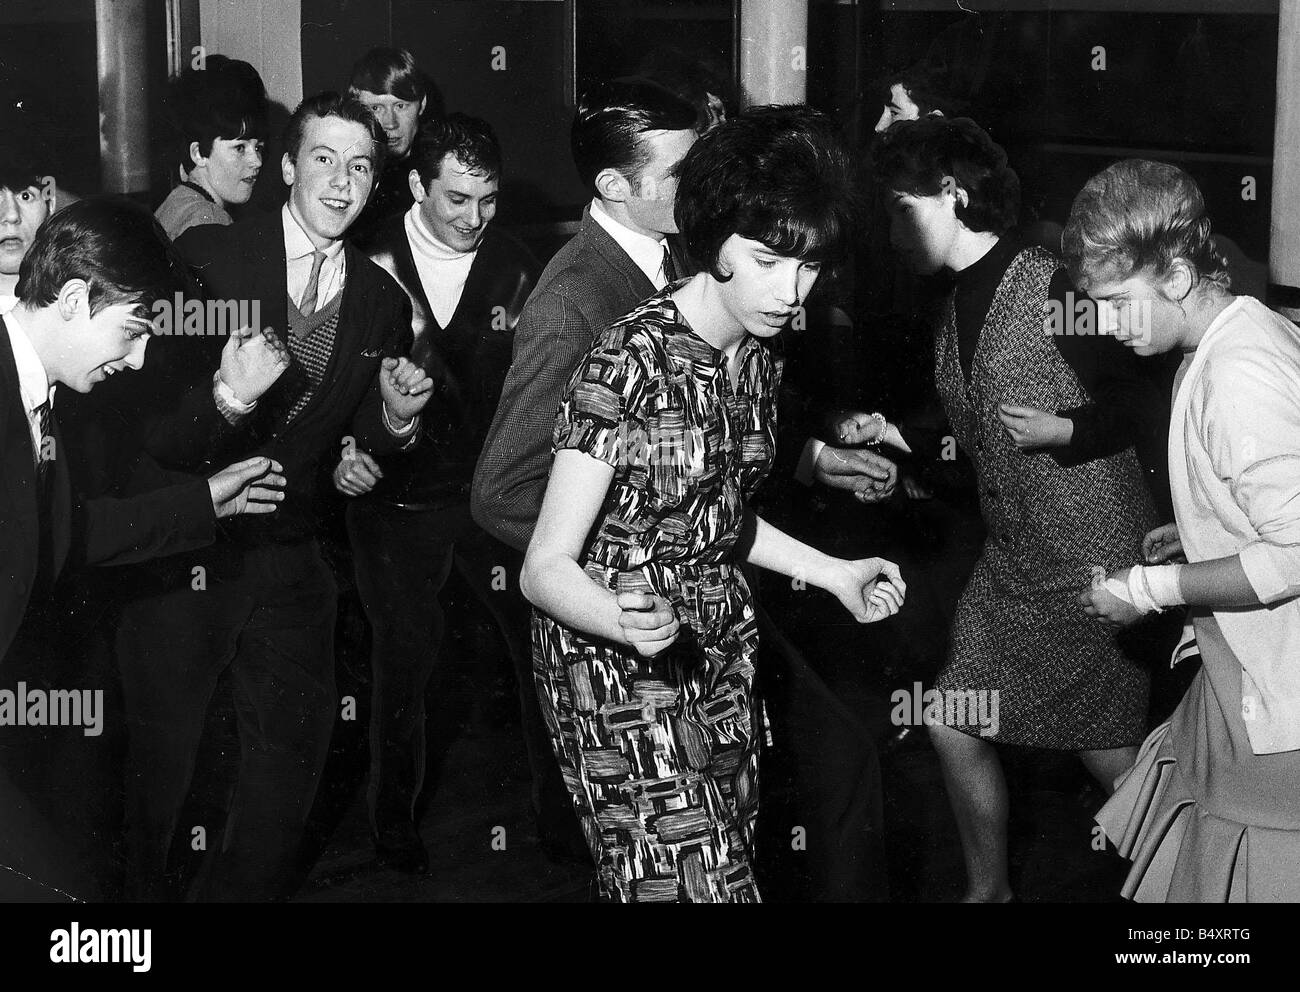 Beatles Fan Club sixties style dancing Stock Photo